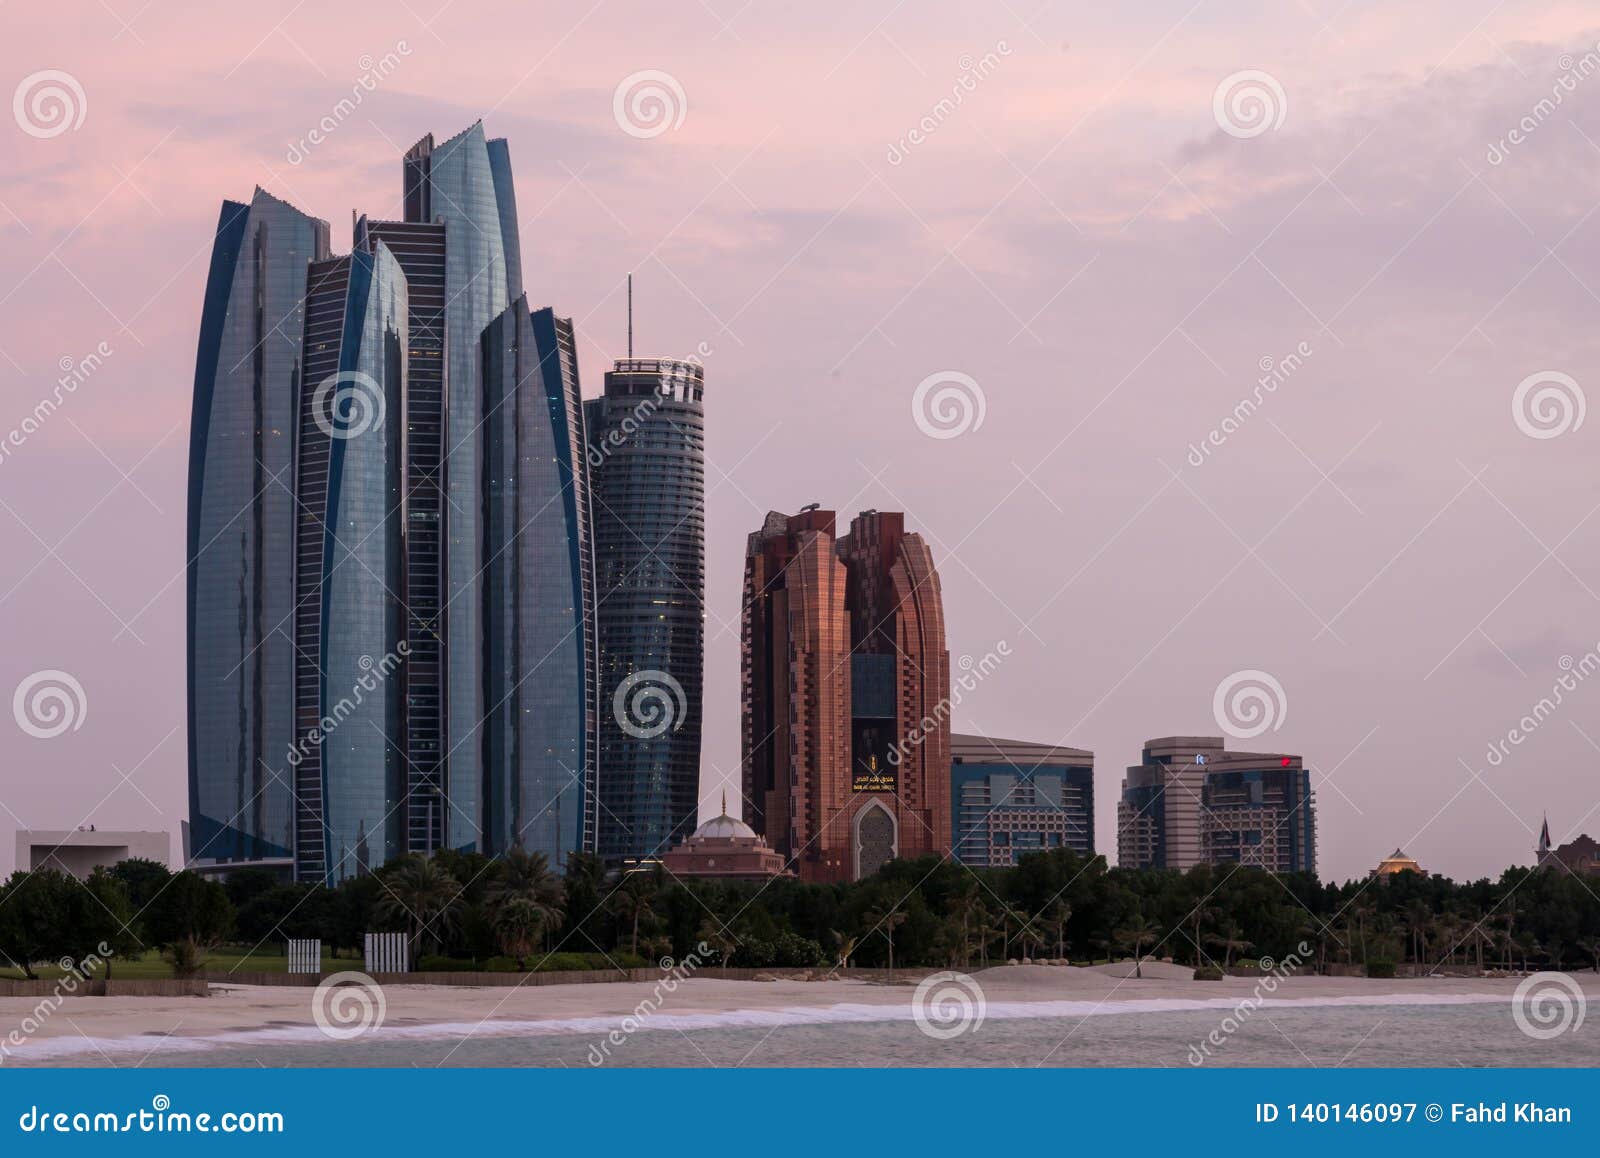 Etihad Towers And Bab Al Qasar Hotel At Sunset Corniche Abu Dhabi